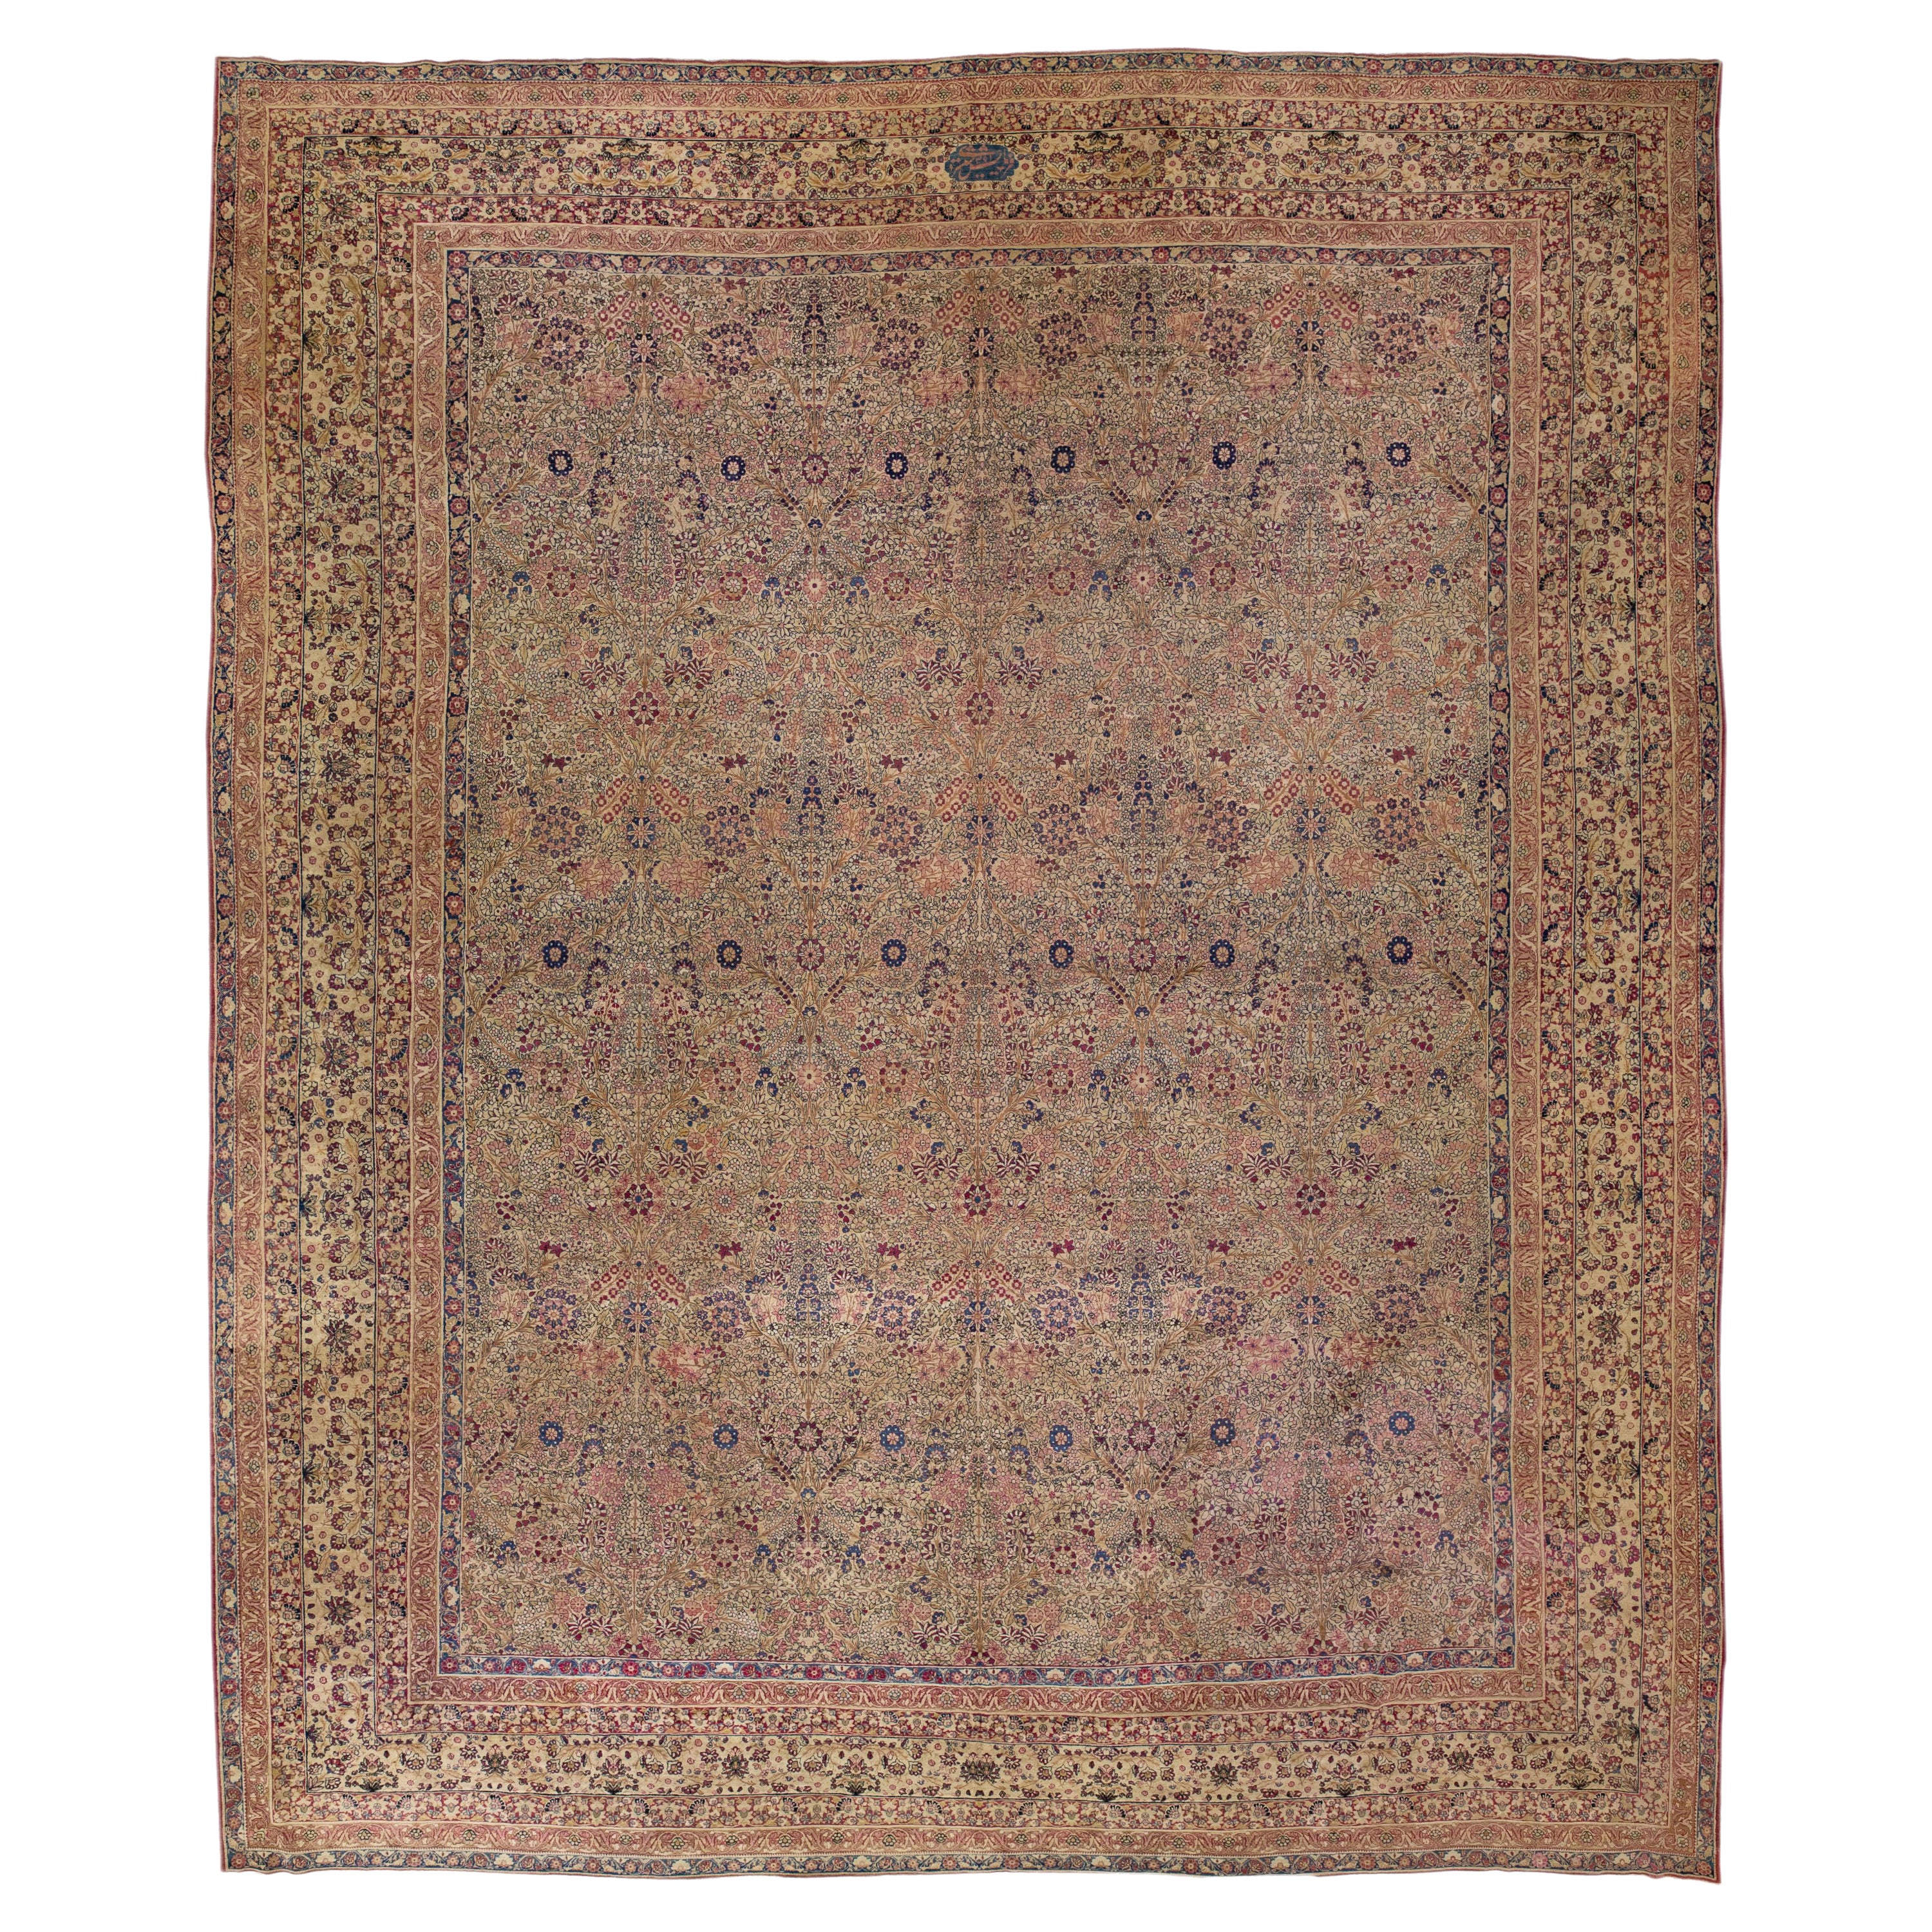 Antique Kerman Handmade Multicolor Persian Wool Rug with Allover Floral Motif